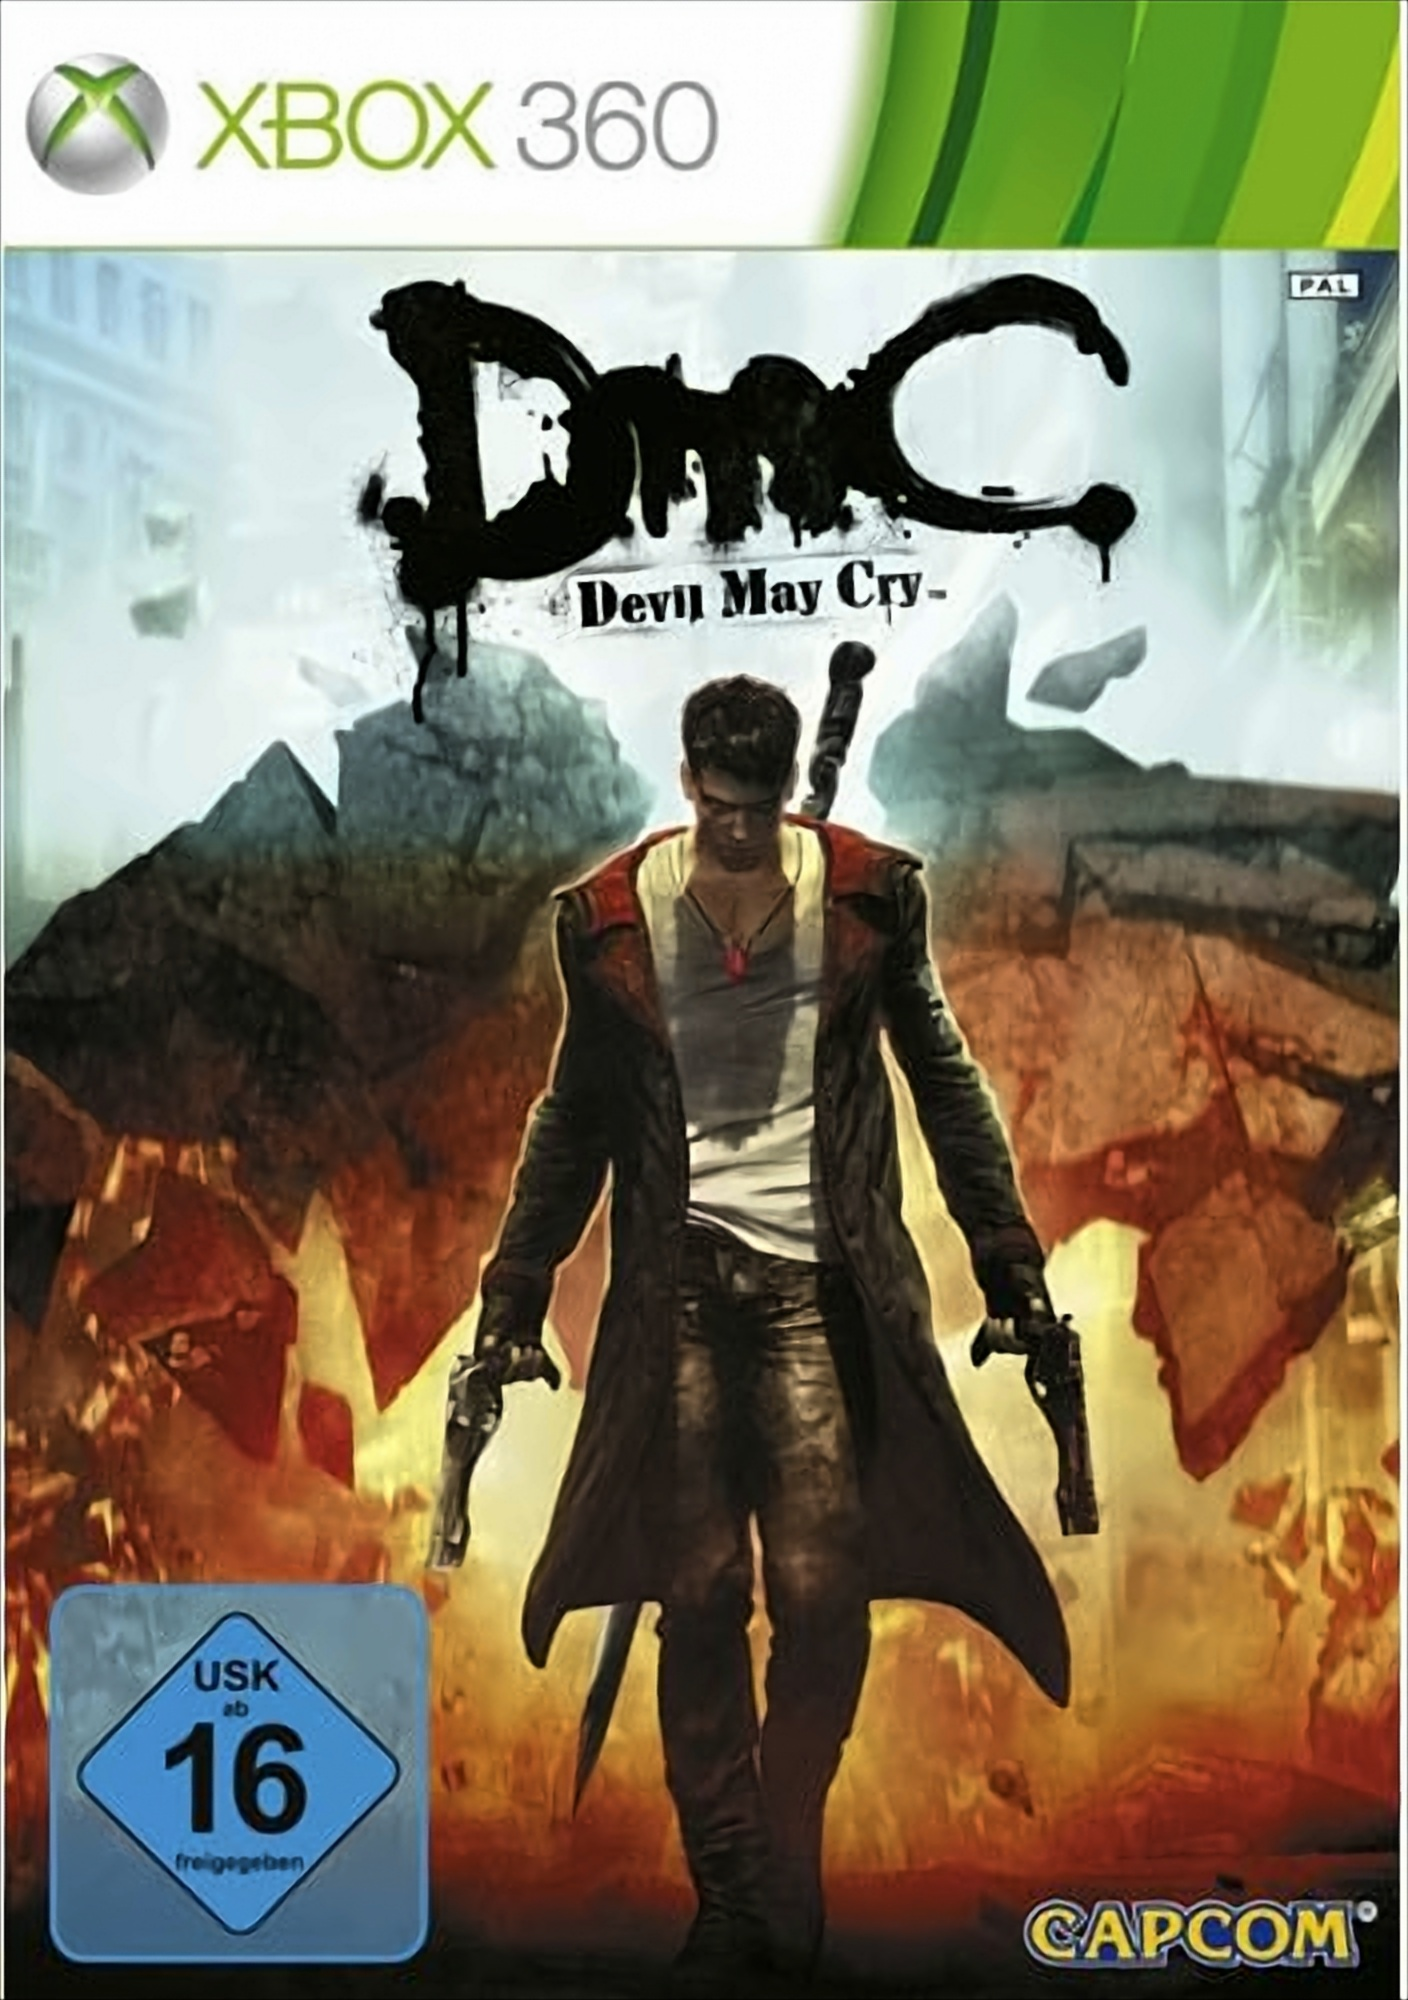 May Devil Cry 5 DmC 360] [Xbox -